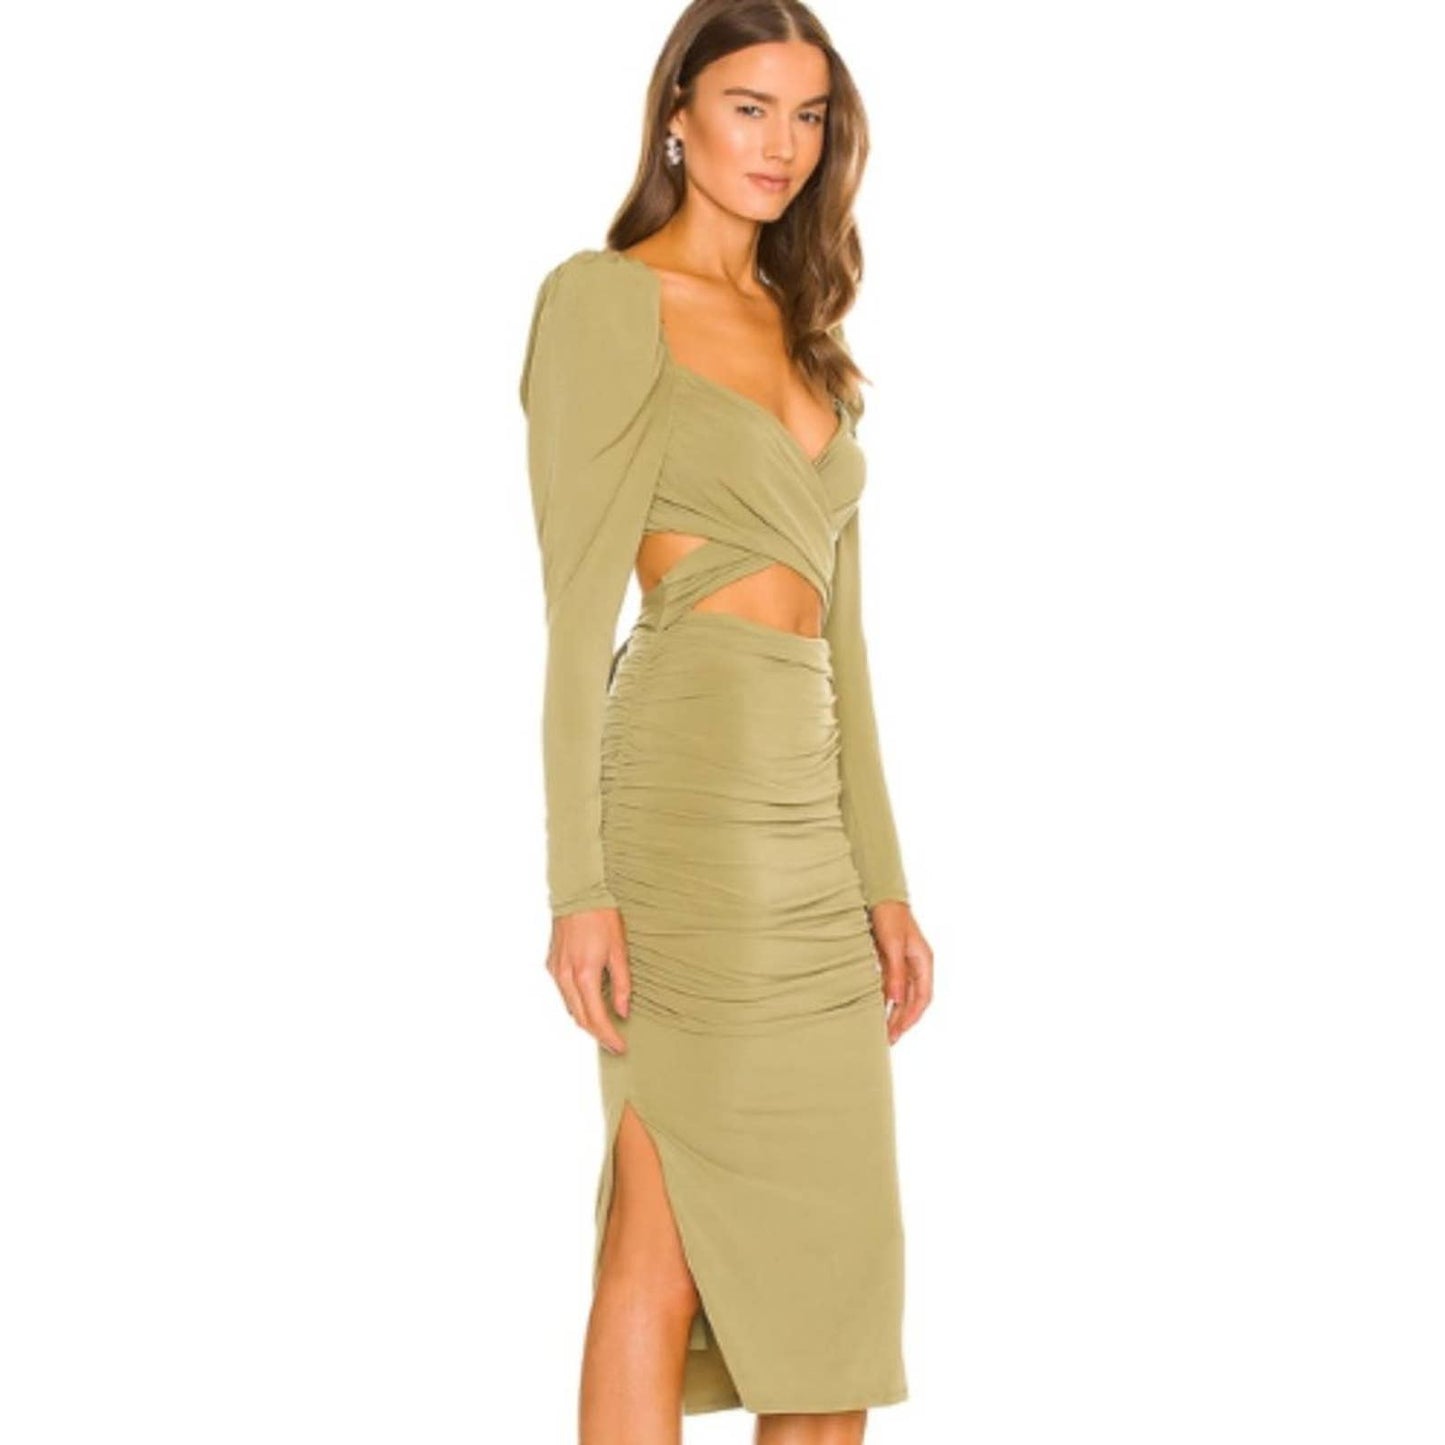 Majorelle Darla Midi Dress in Olive Green NWOT Size Small